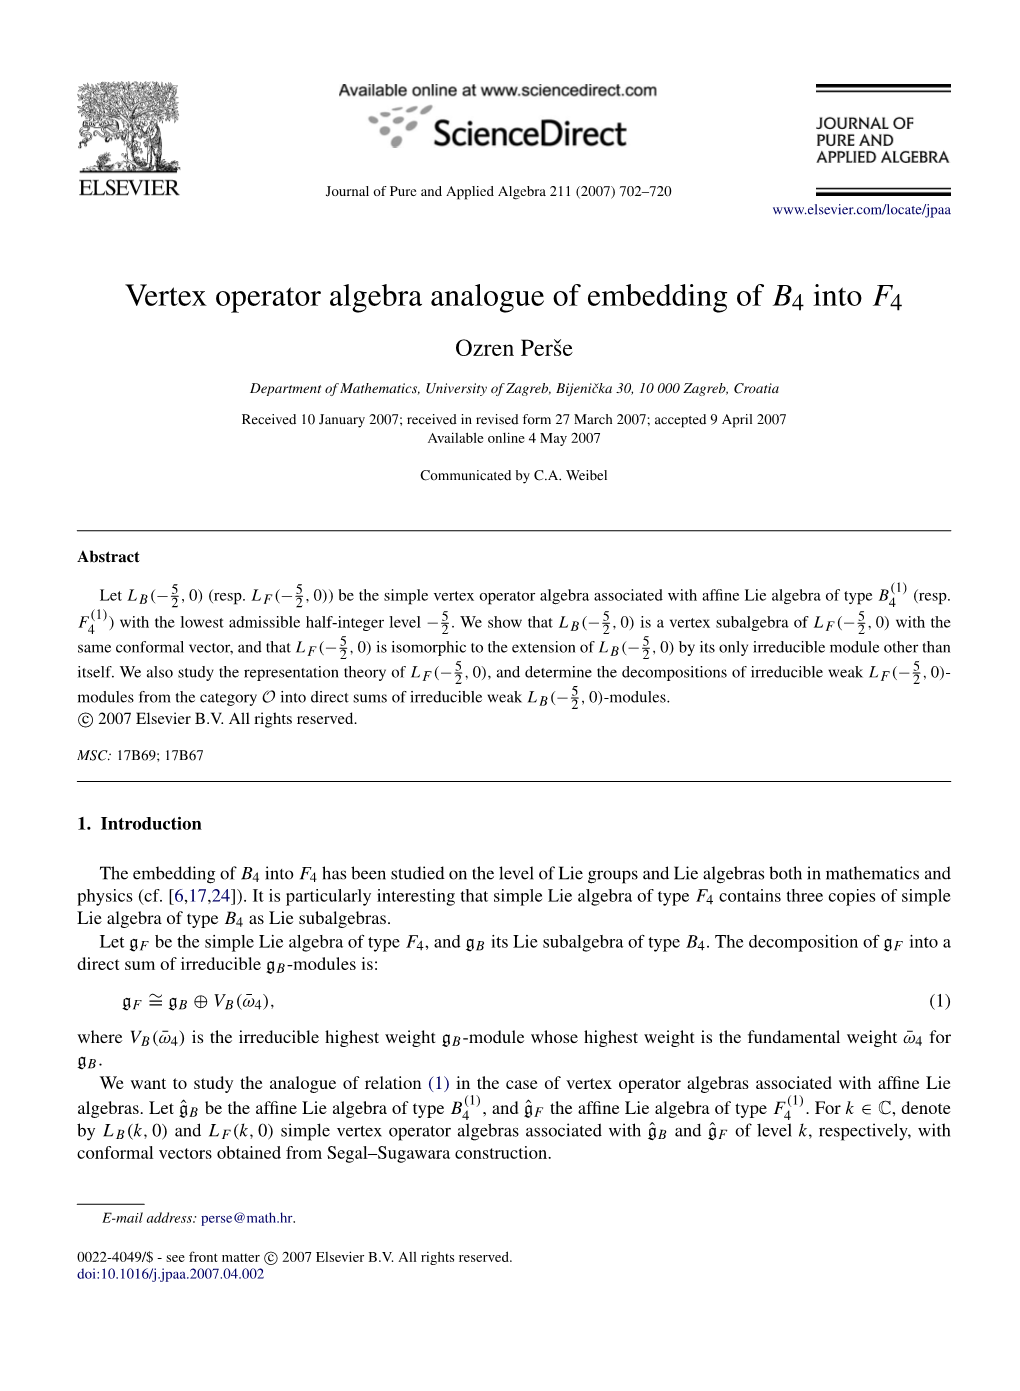 Vertex Operator Algebra Analogue of Embedding of B4 Into F4 Ozren Perseˇ